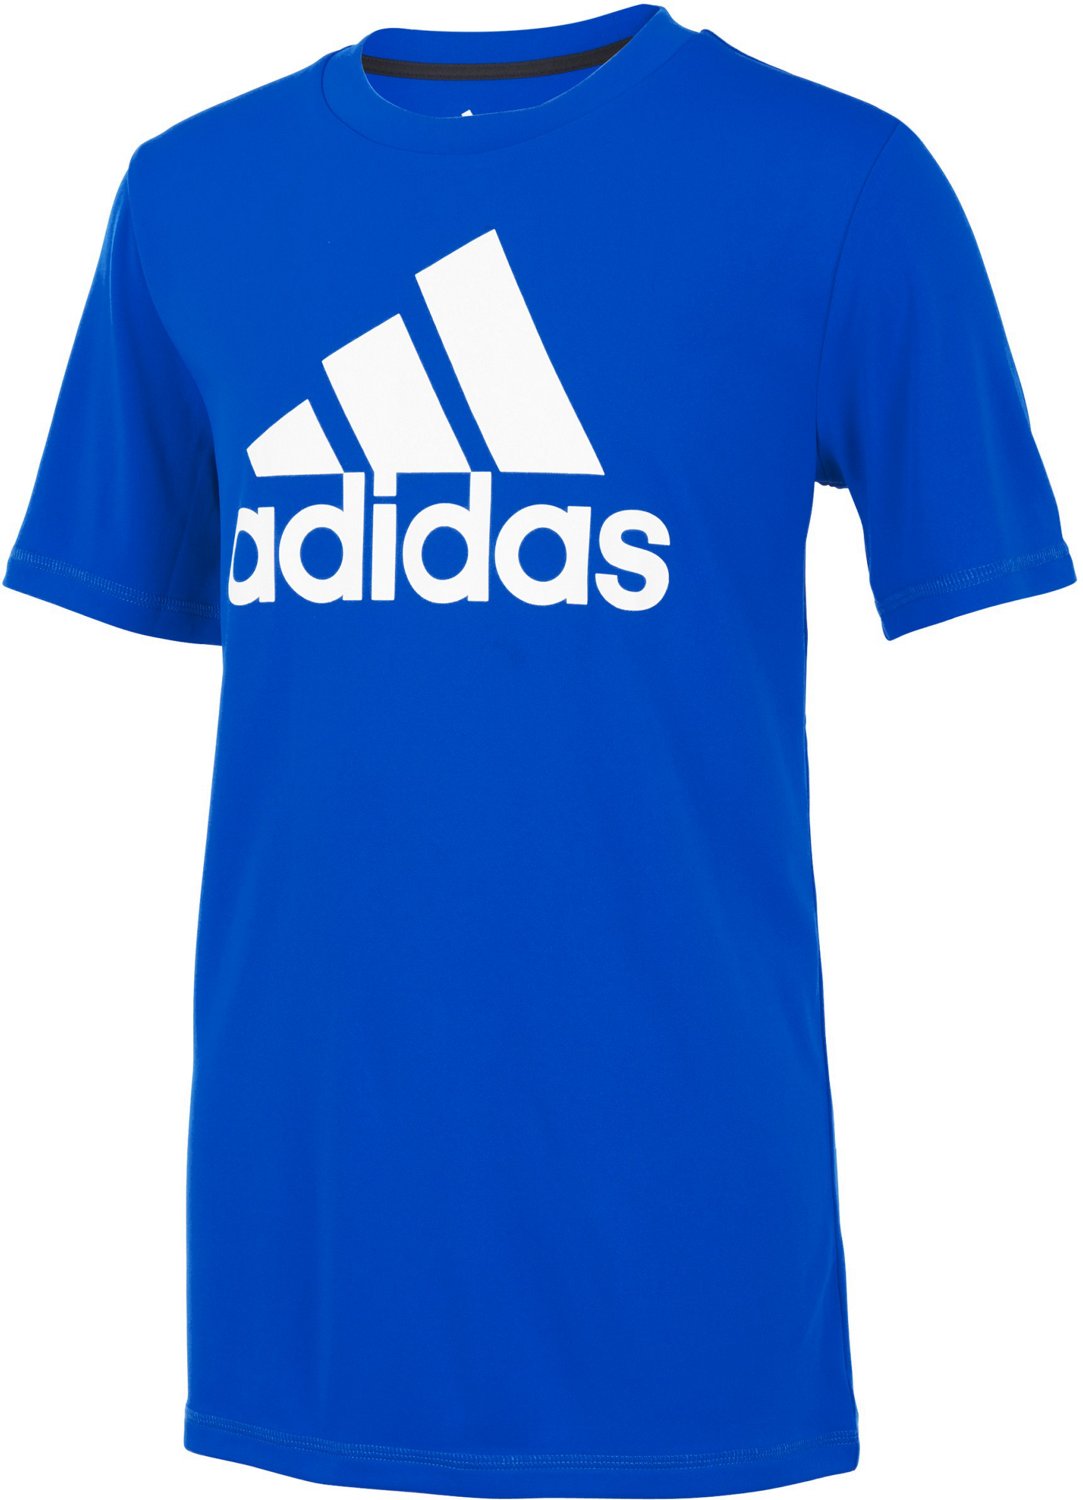 adidas Boys' climalite Performance Logo T-shirt